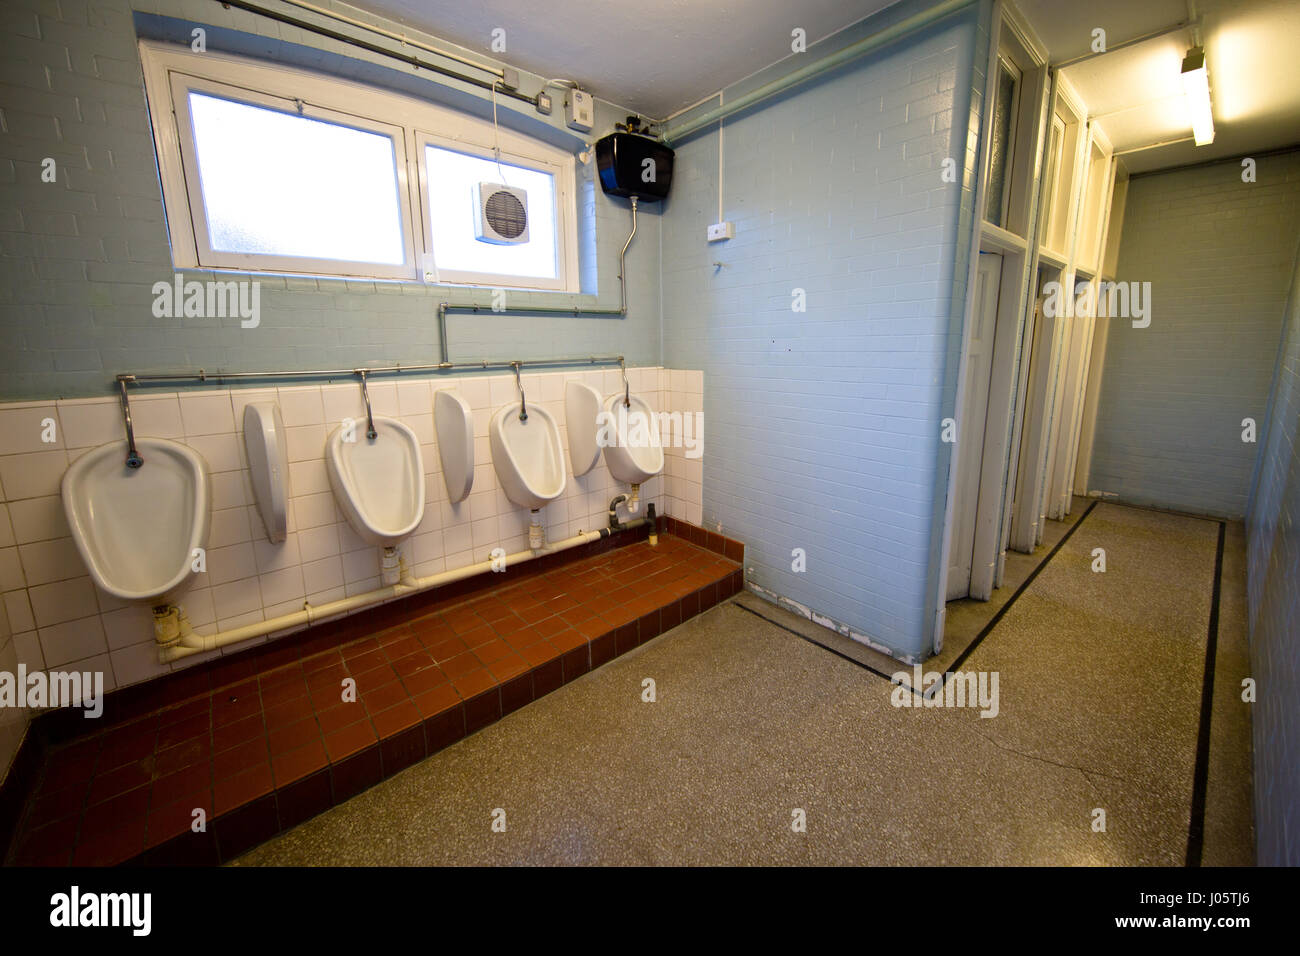 Gents toilet, row of urinals Stock Photo